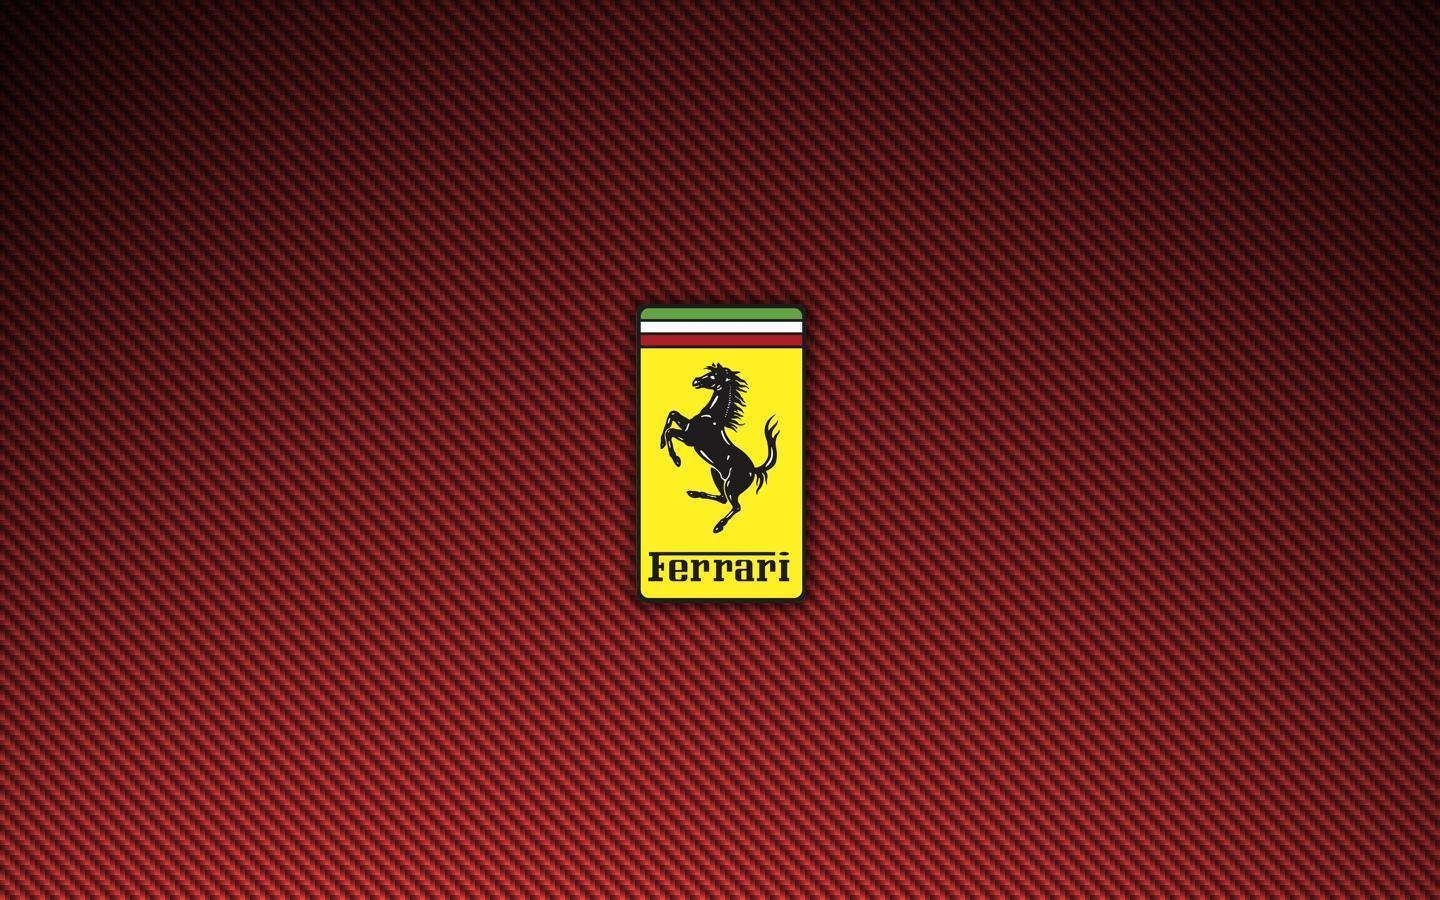 Ferrari Logo Wallpaper 4304 Hd Wallpapers in Logos   Imagescicom